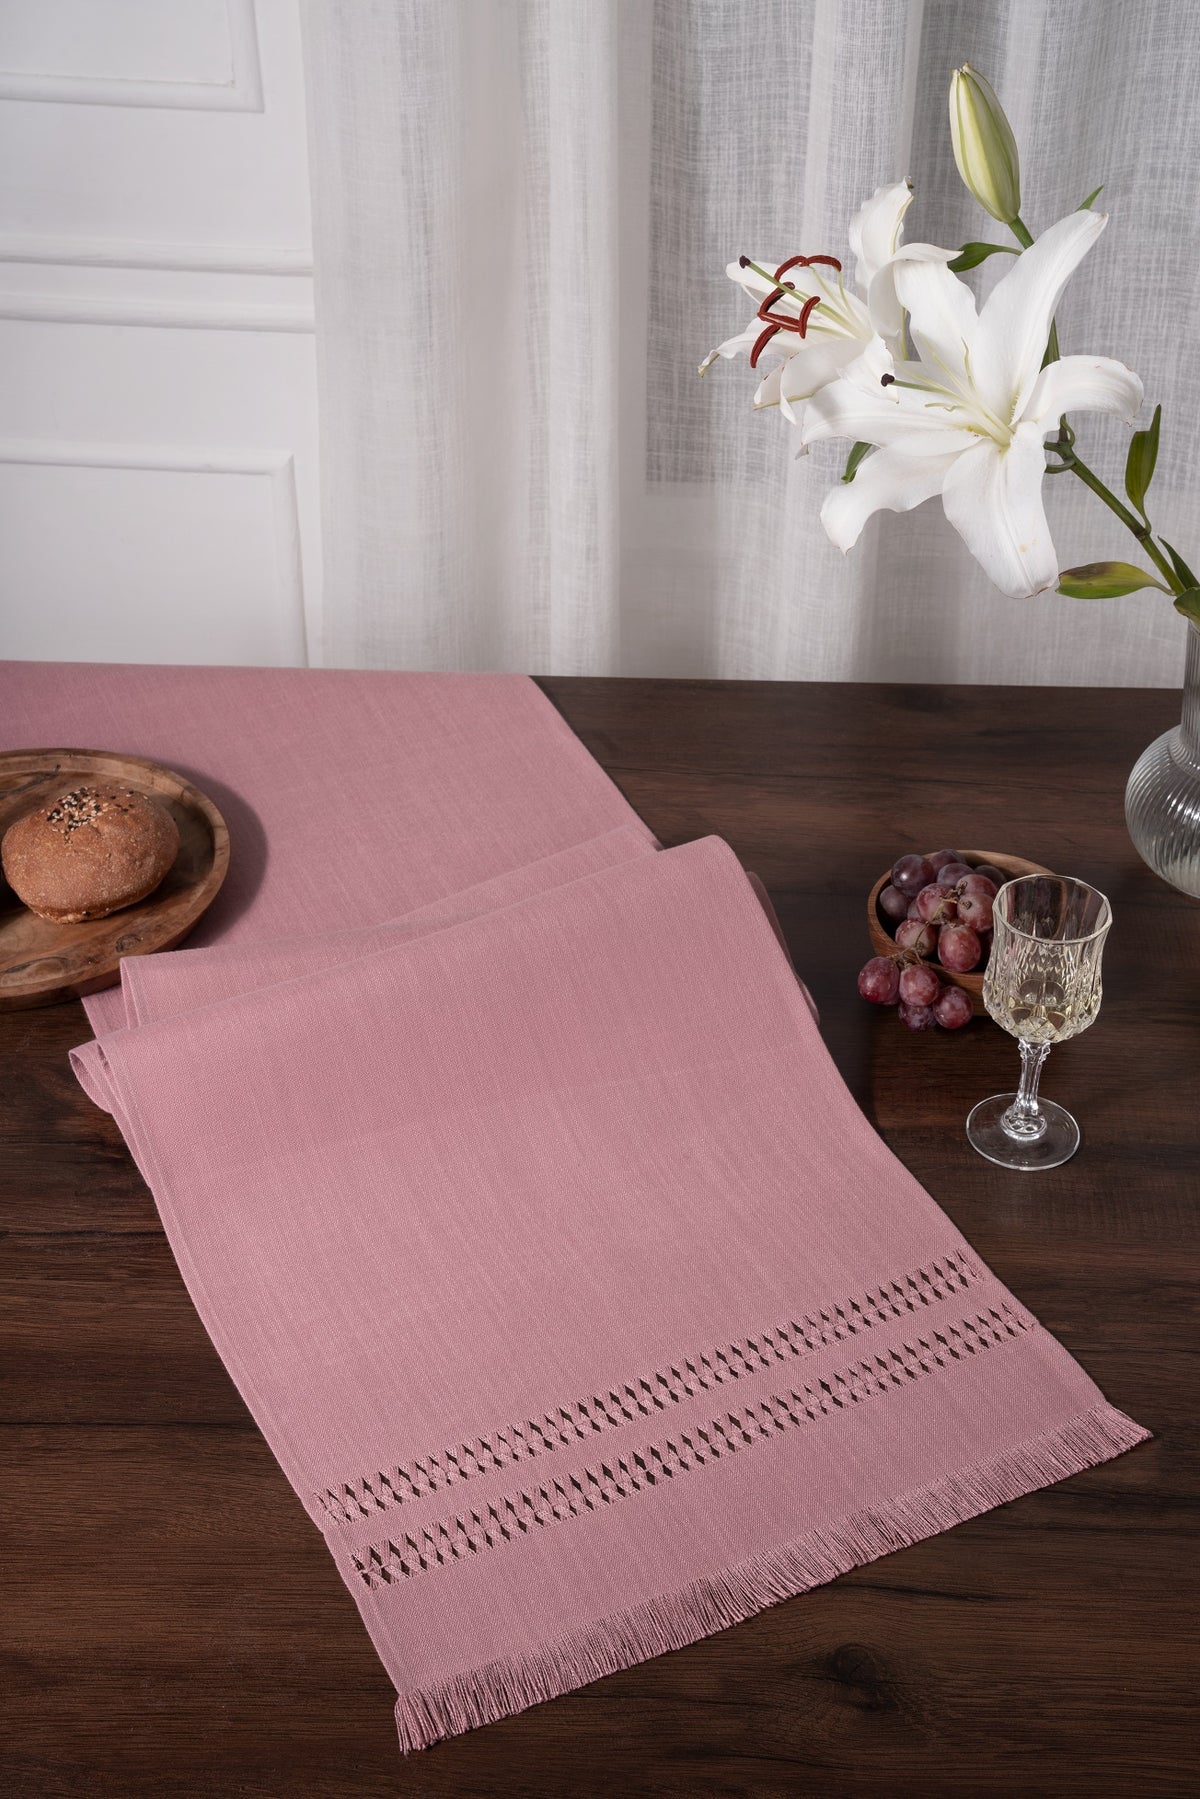 Dusty Pink Linen Textured Table Runner - Hand Hemstitch